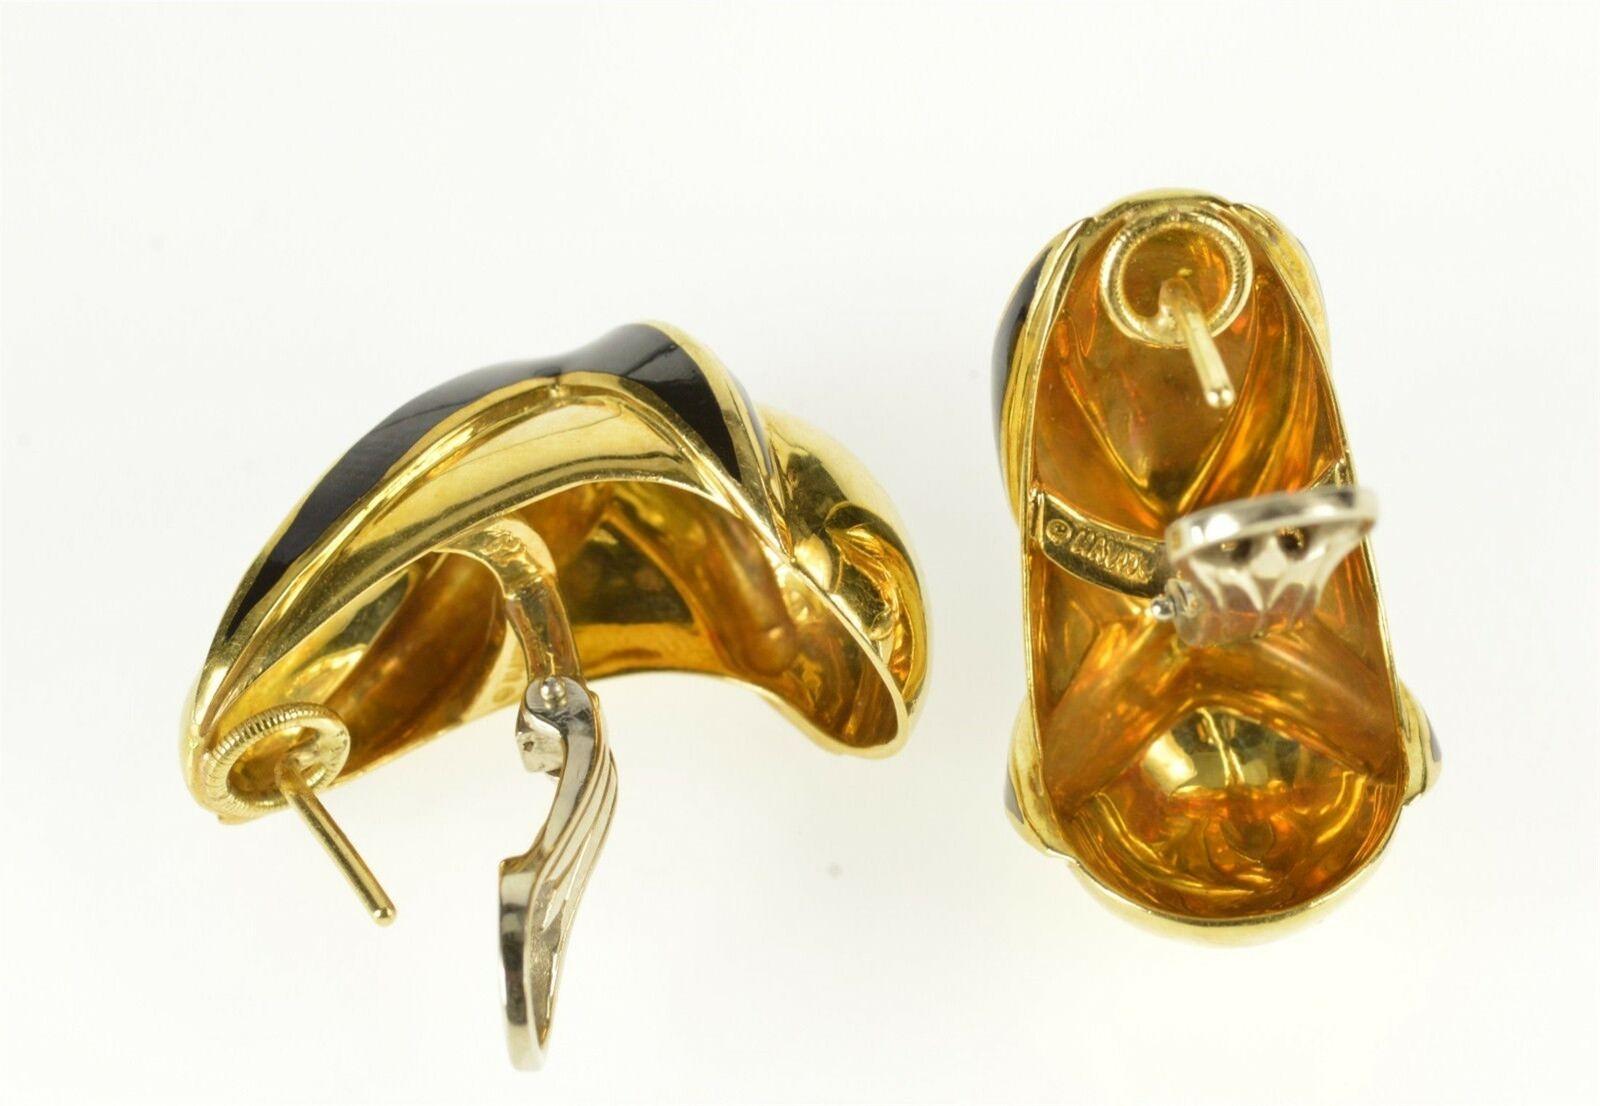 Item:  18K Mavito Designer Black Enamel X Statement Earrings Yellow Gold

Weight:  26g

Composition:  18k Gold Marked

Condition:  Estate:Good

Era:  Vintage

Measure*:  16.9mm (w) 29mm (h) 10.4mm (d)